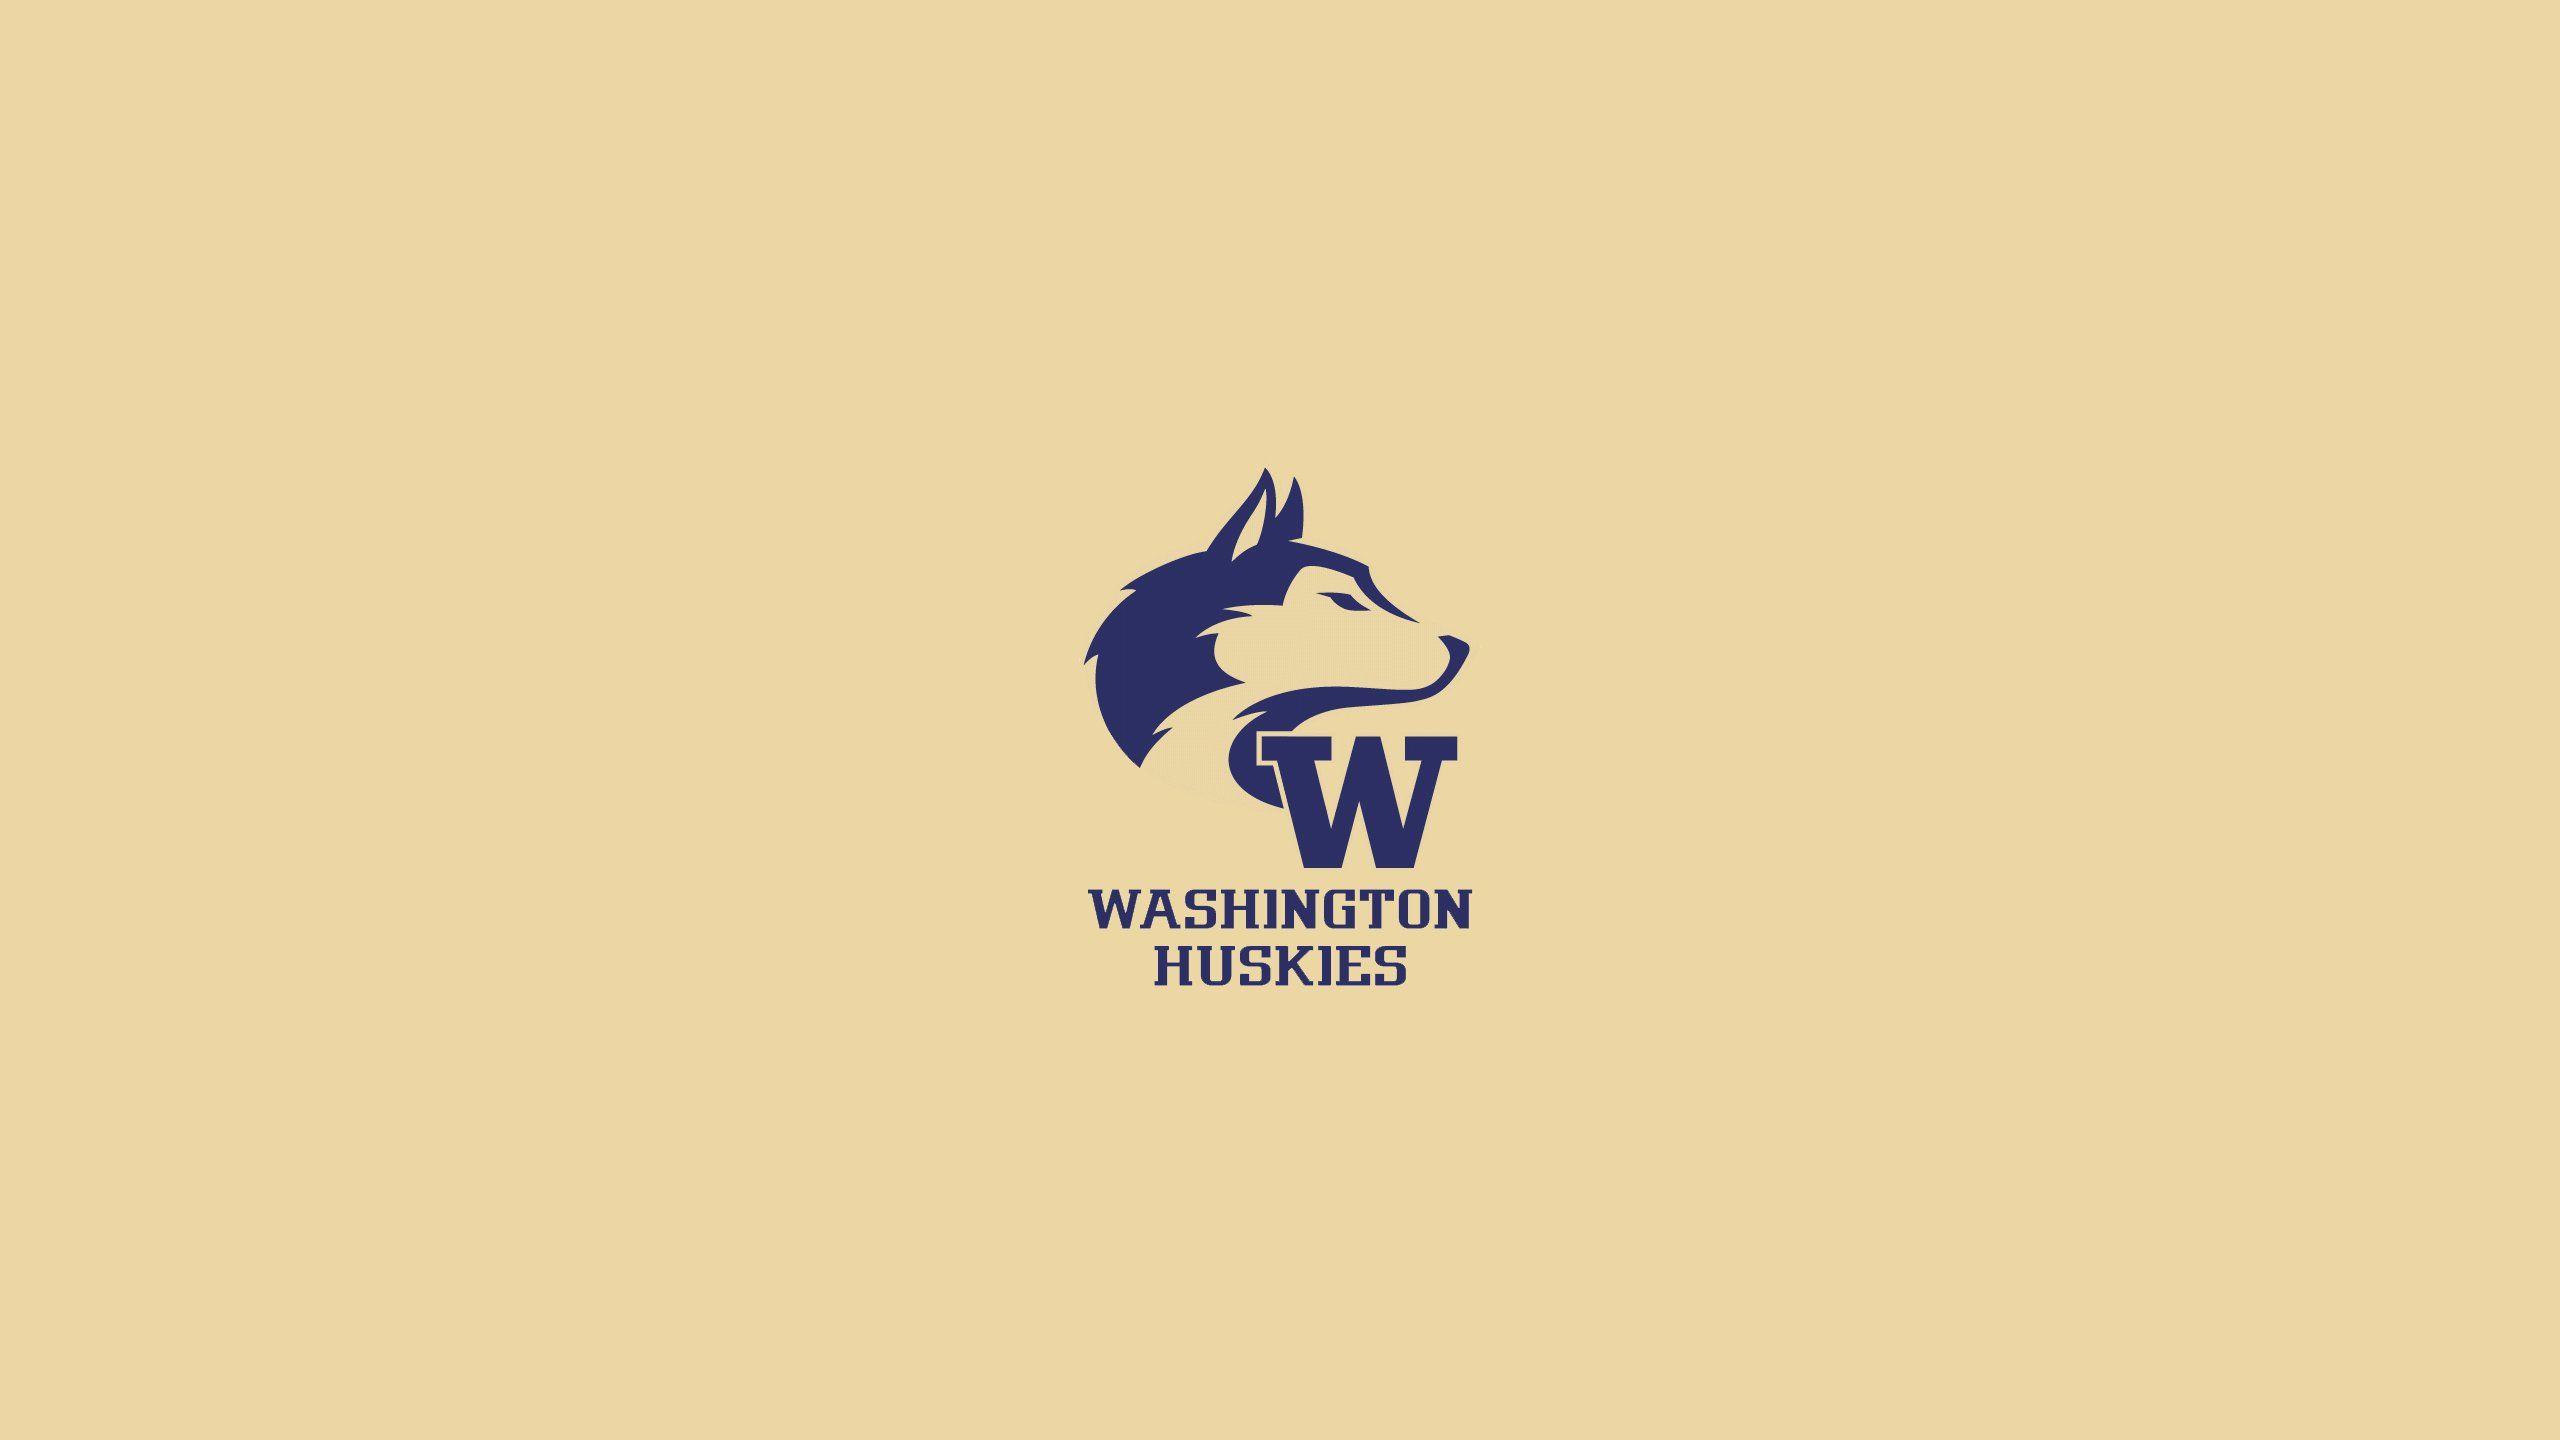 Washington Huskies - NCAAF - Square Bettor